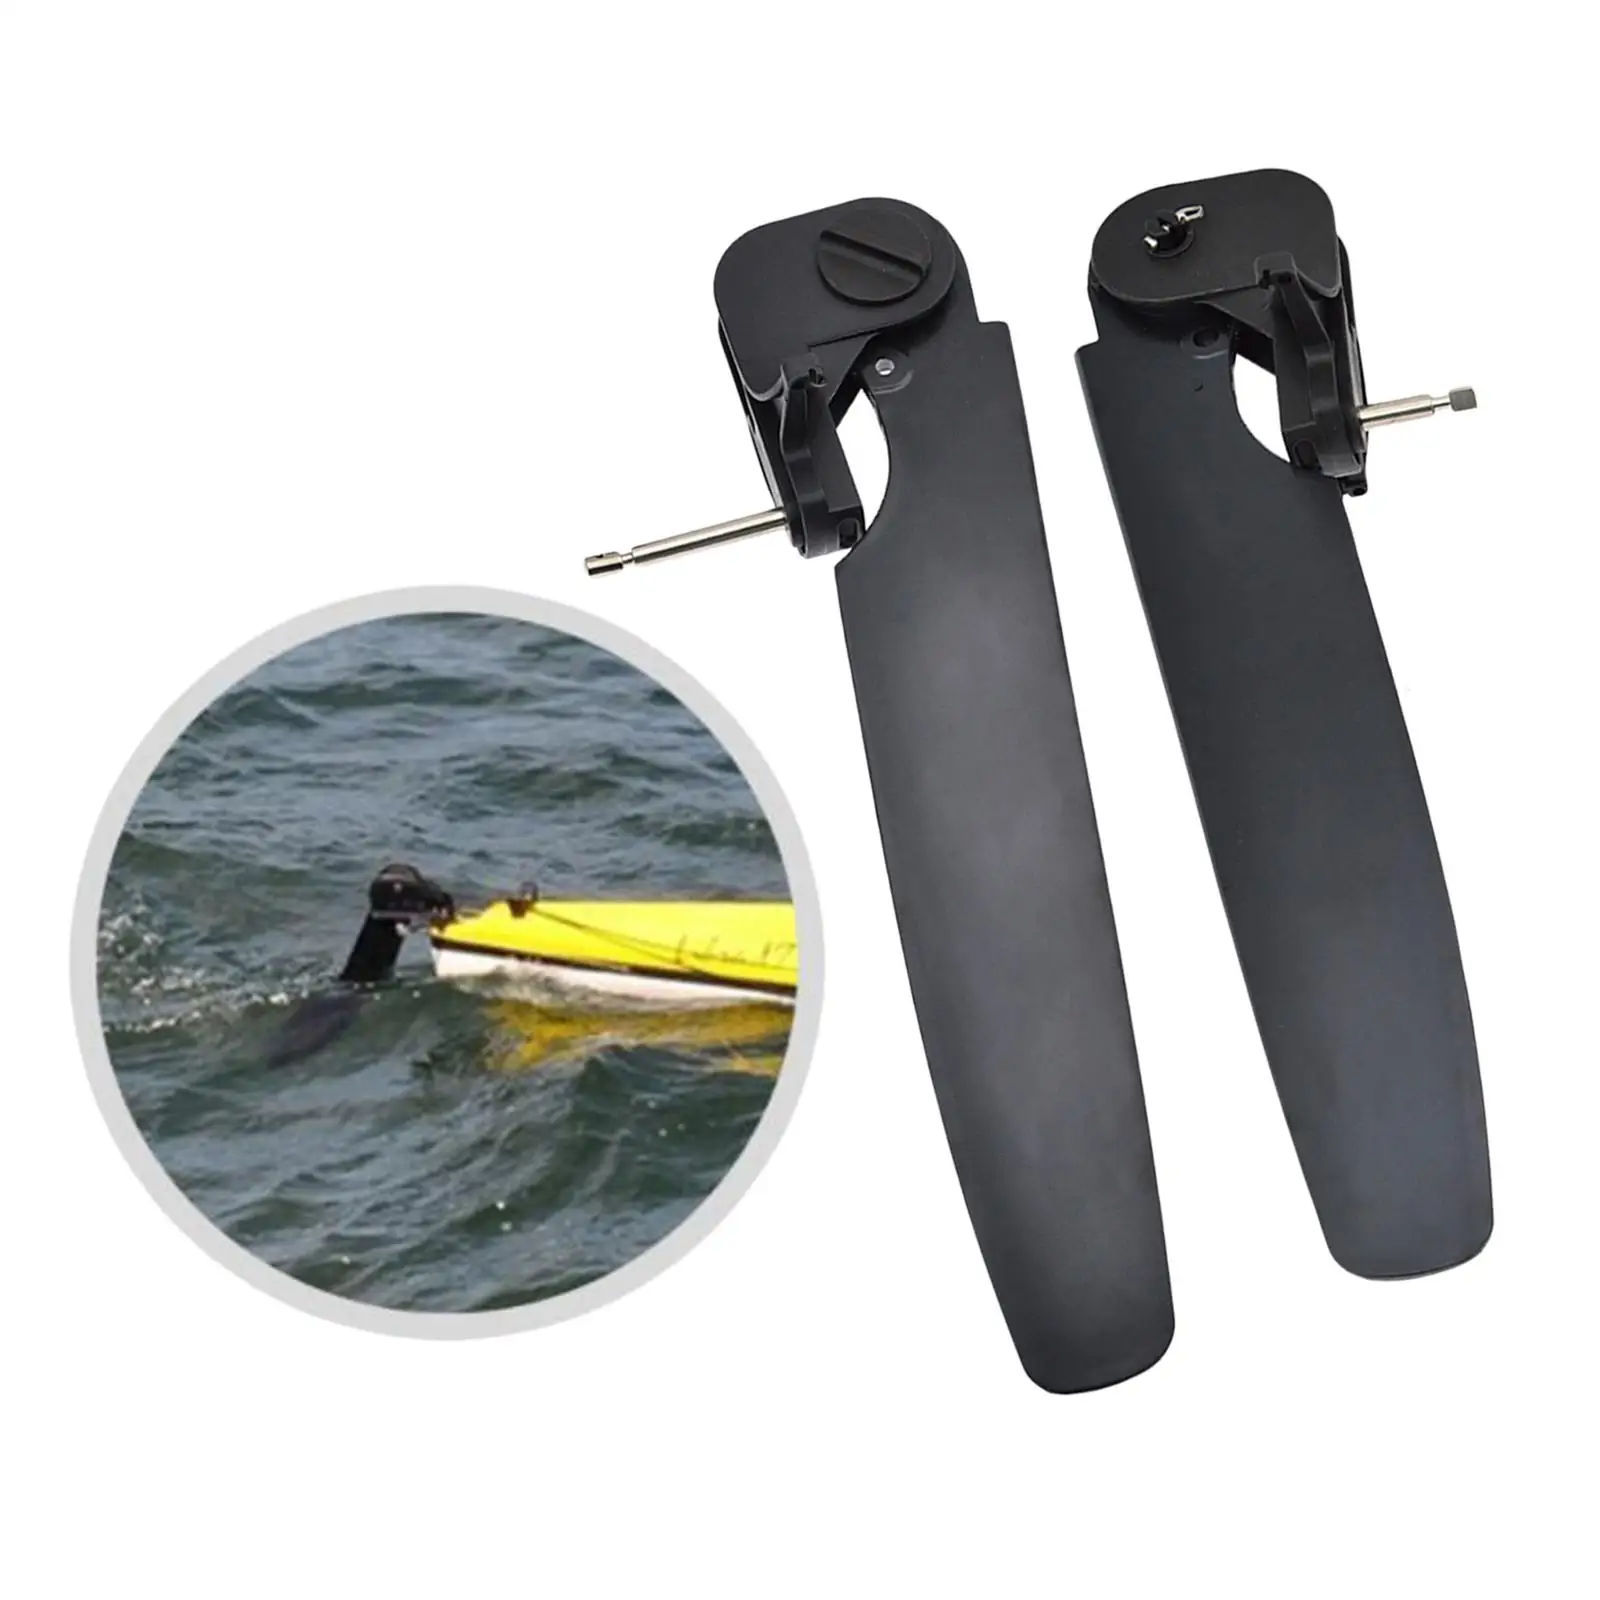 Canoe Kayak Boat Rudder Foot Control Fixation Watercraft Replacement Fishing